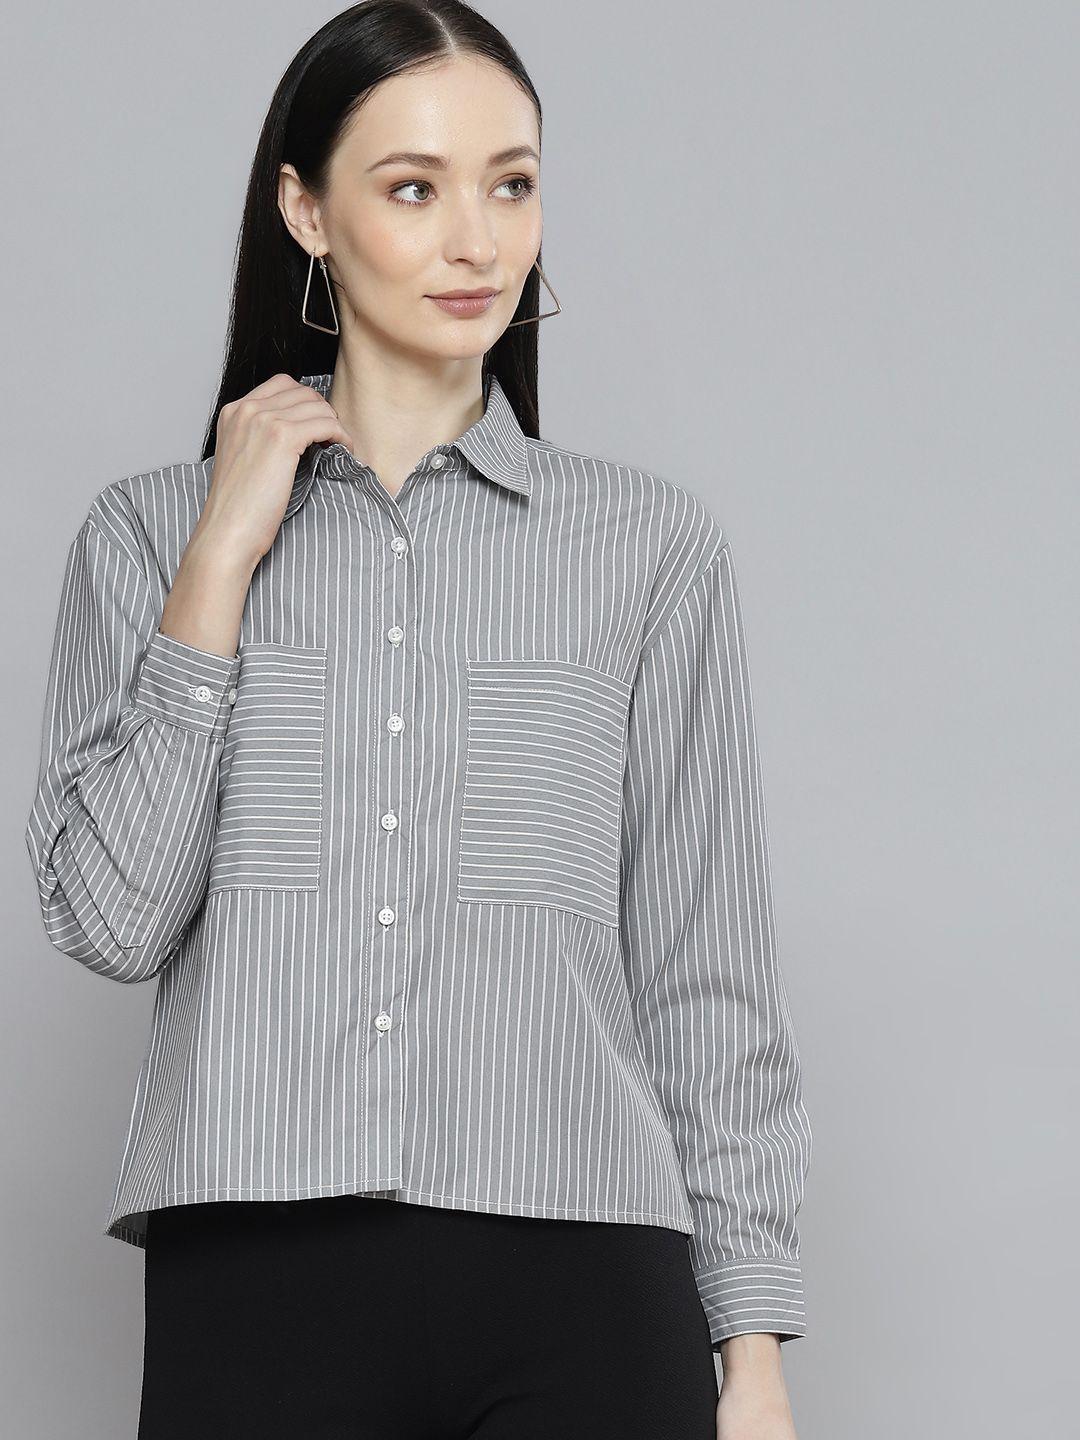 dennison women grey & white smart pinstripes striped shirt